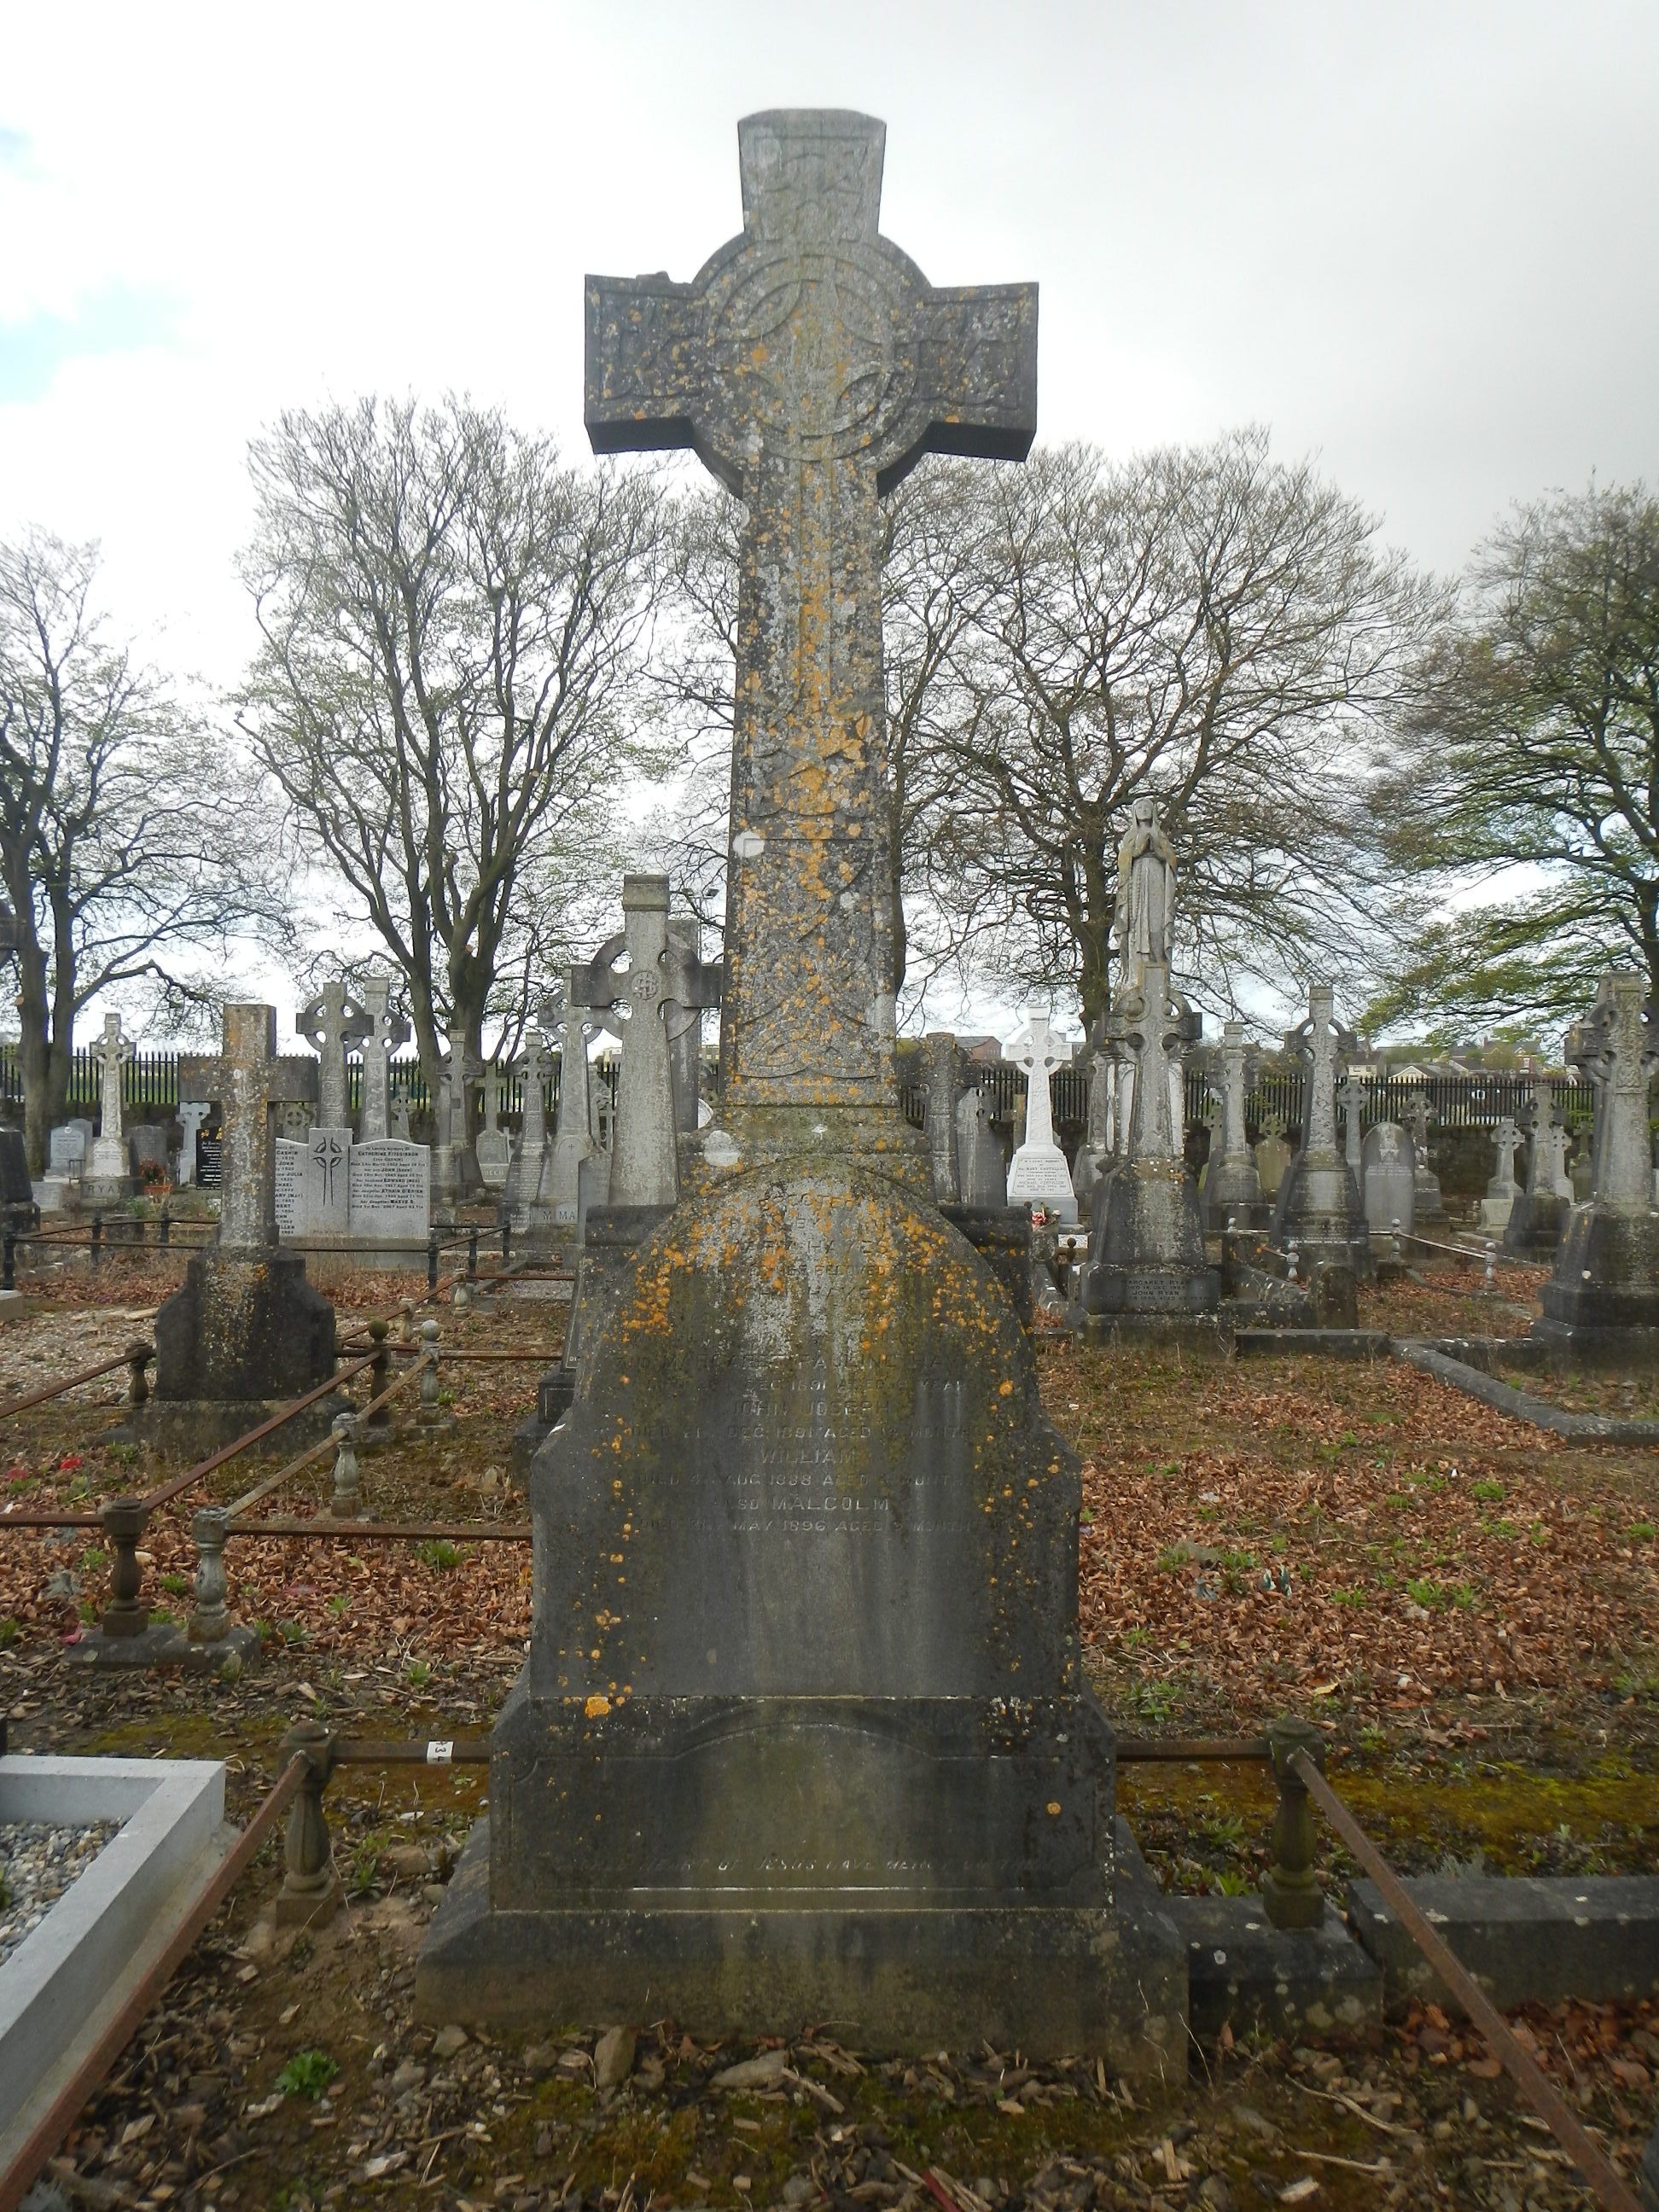 Mr. John MacLean:Grave 2694: Hallan Cemetery South Uist